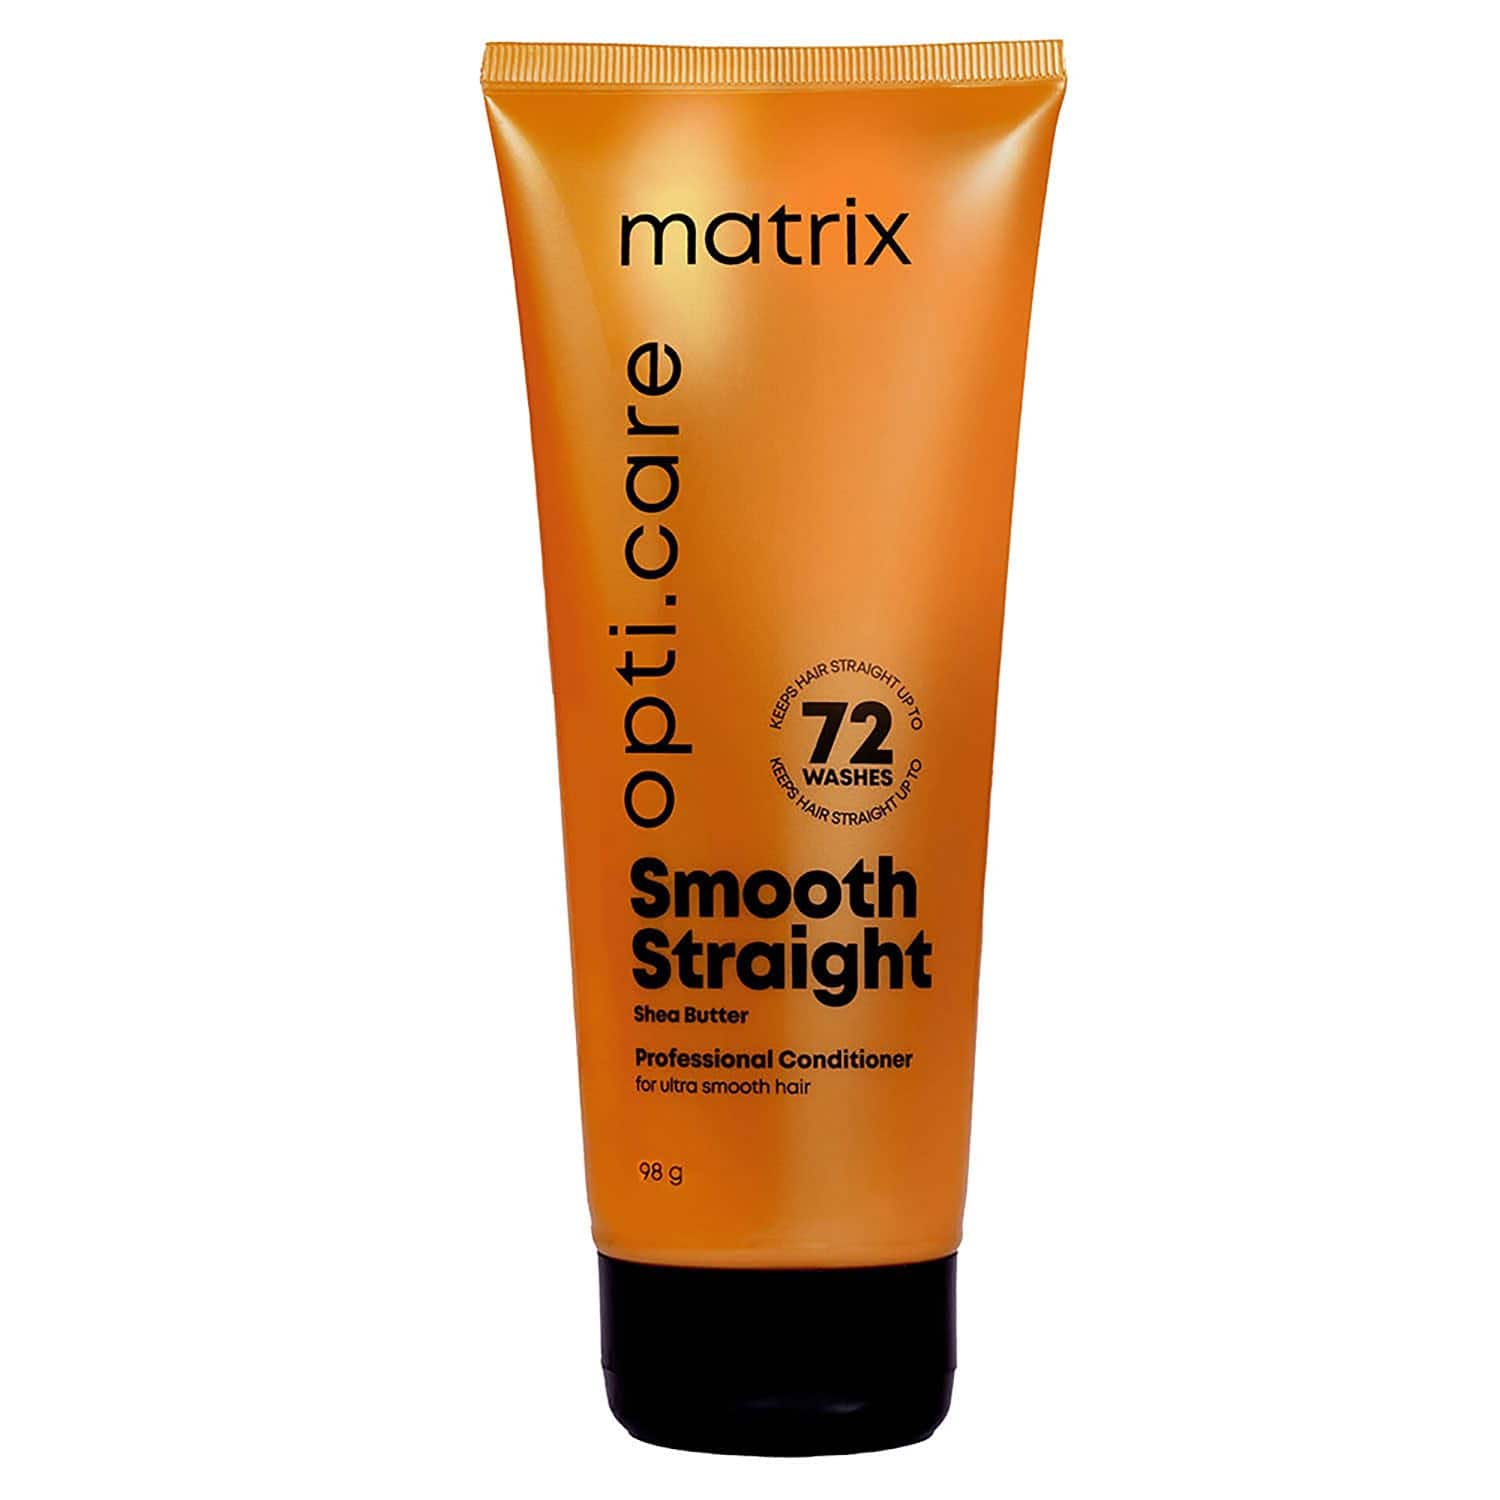 Matrix Opti. Care Professional Conditioner for Salon Smooth Straight Hair